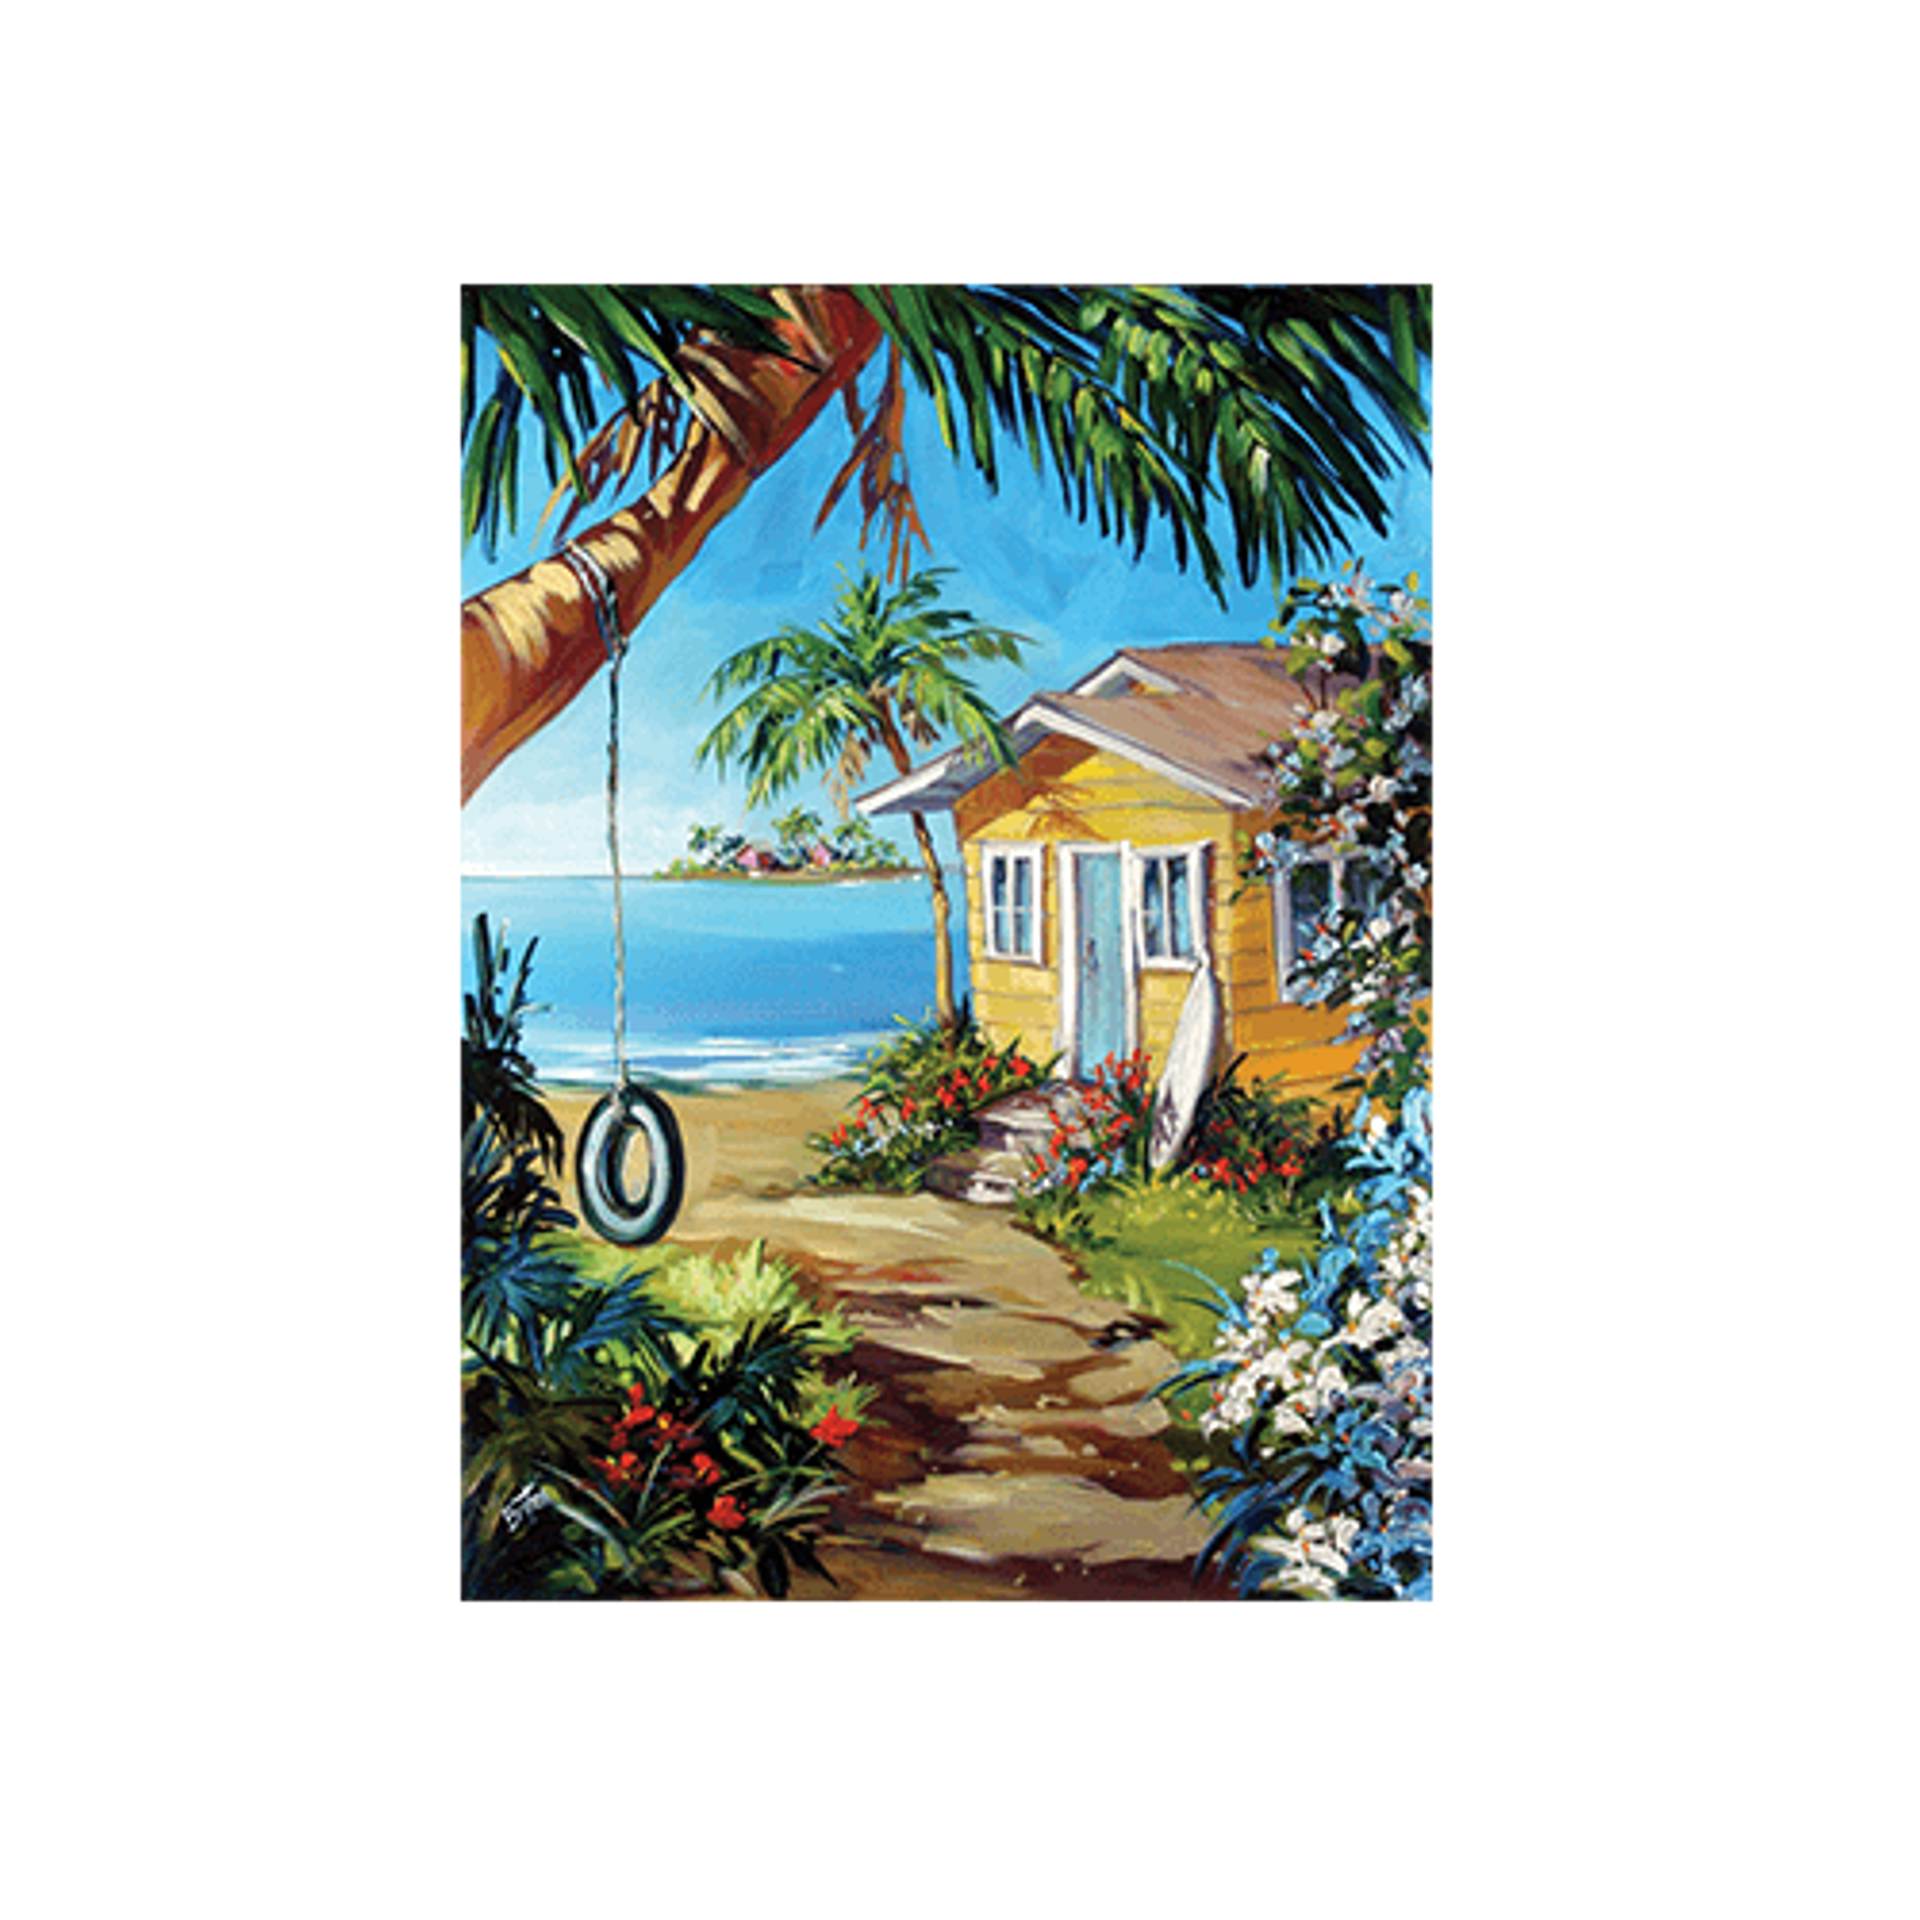 Caribbean Country Club by Steve Barton